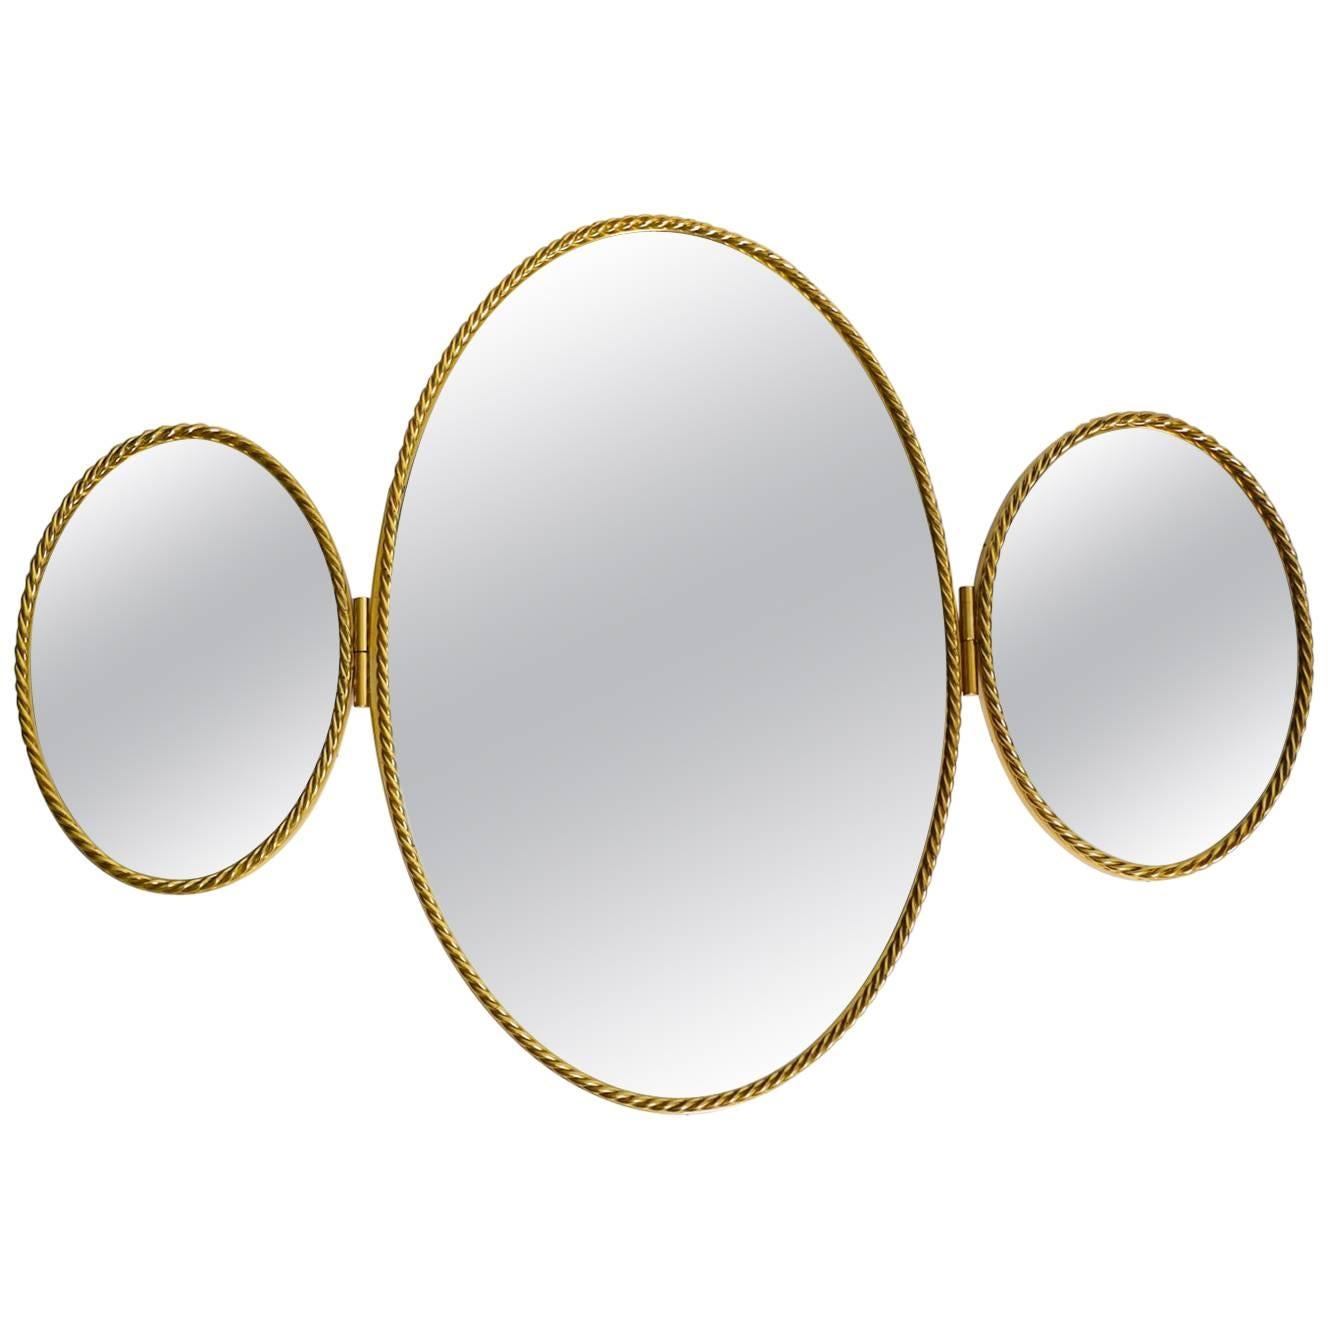 Original Mid-Century Modern Modernist Triple Wall Mirror with Heavy Brass Frames